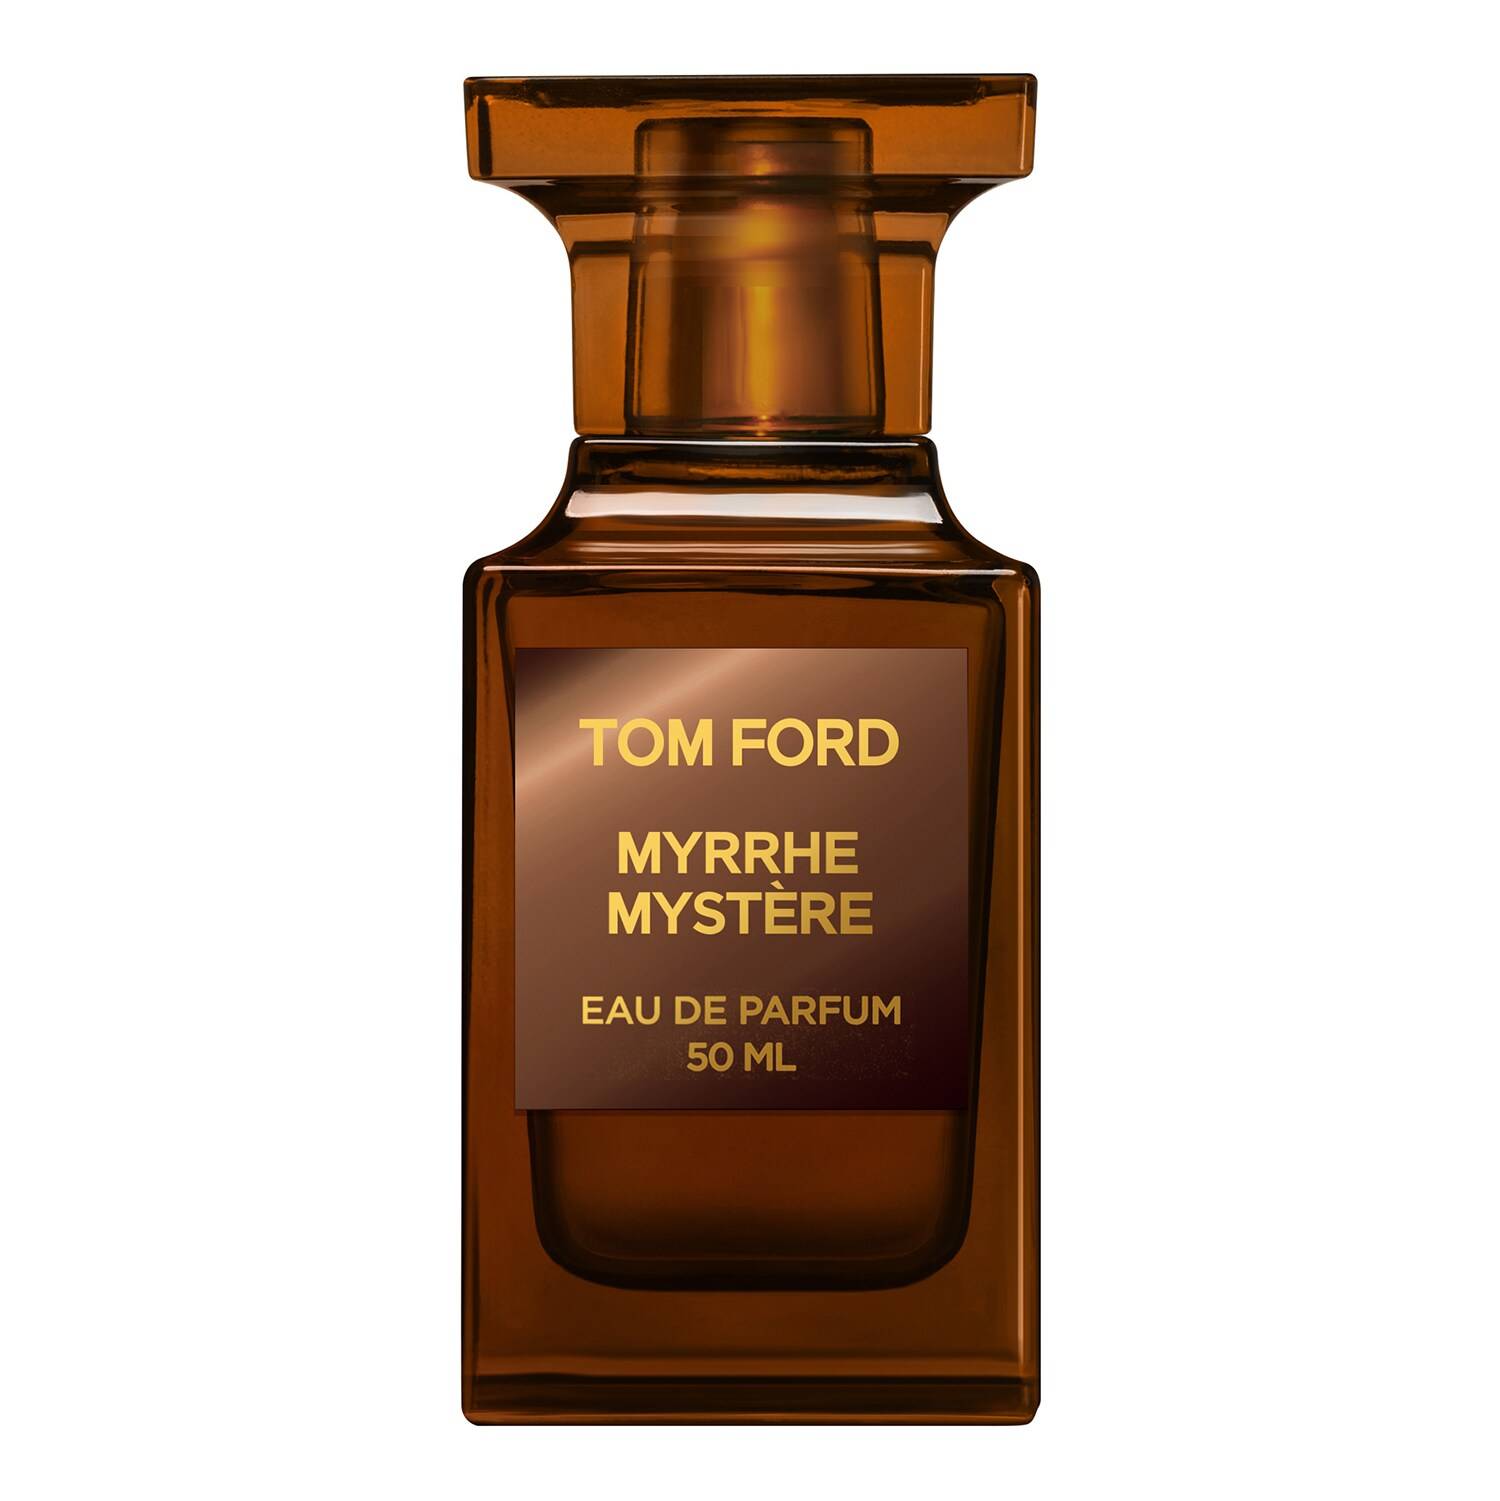 Tom Ford Myrrhe Mystere - Eau De Parfum 50 Ml